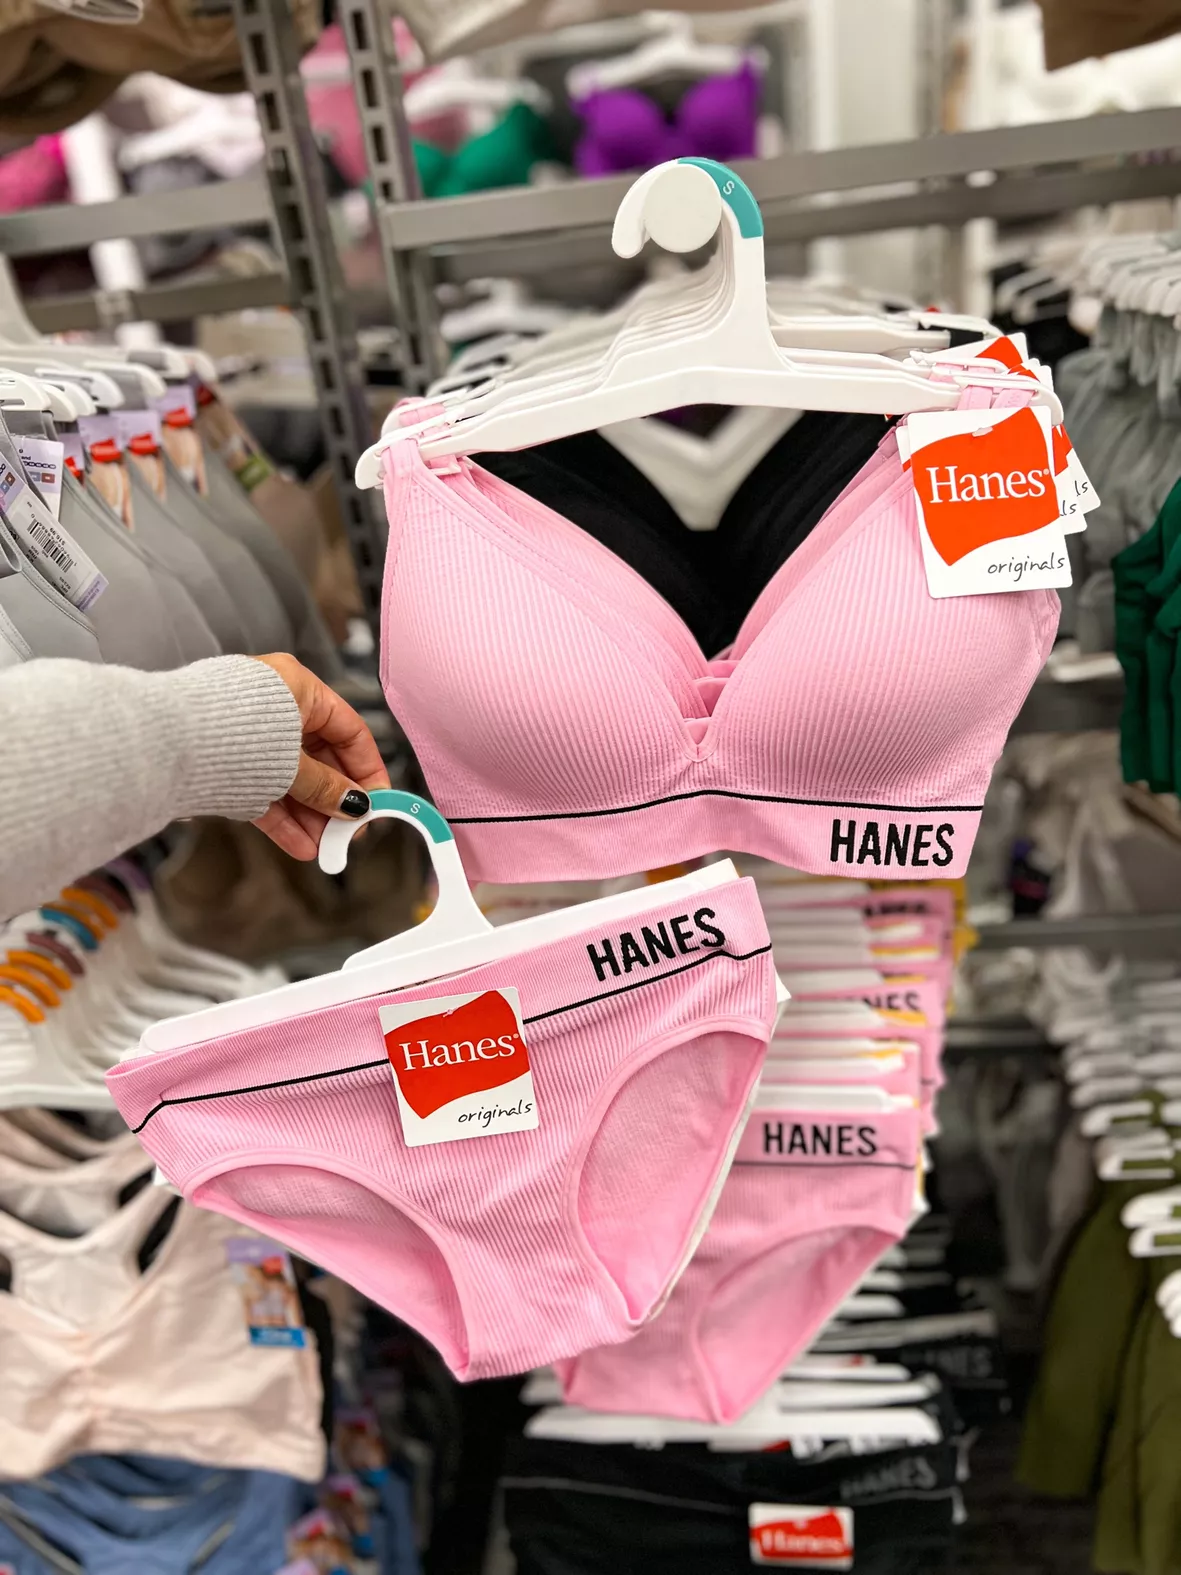 Undergarment Sets : Panties & Underwear for Women : Target